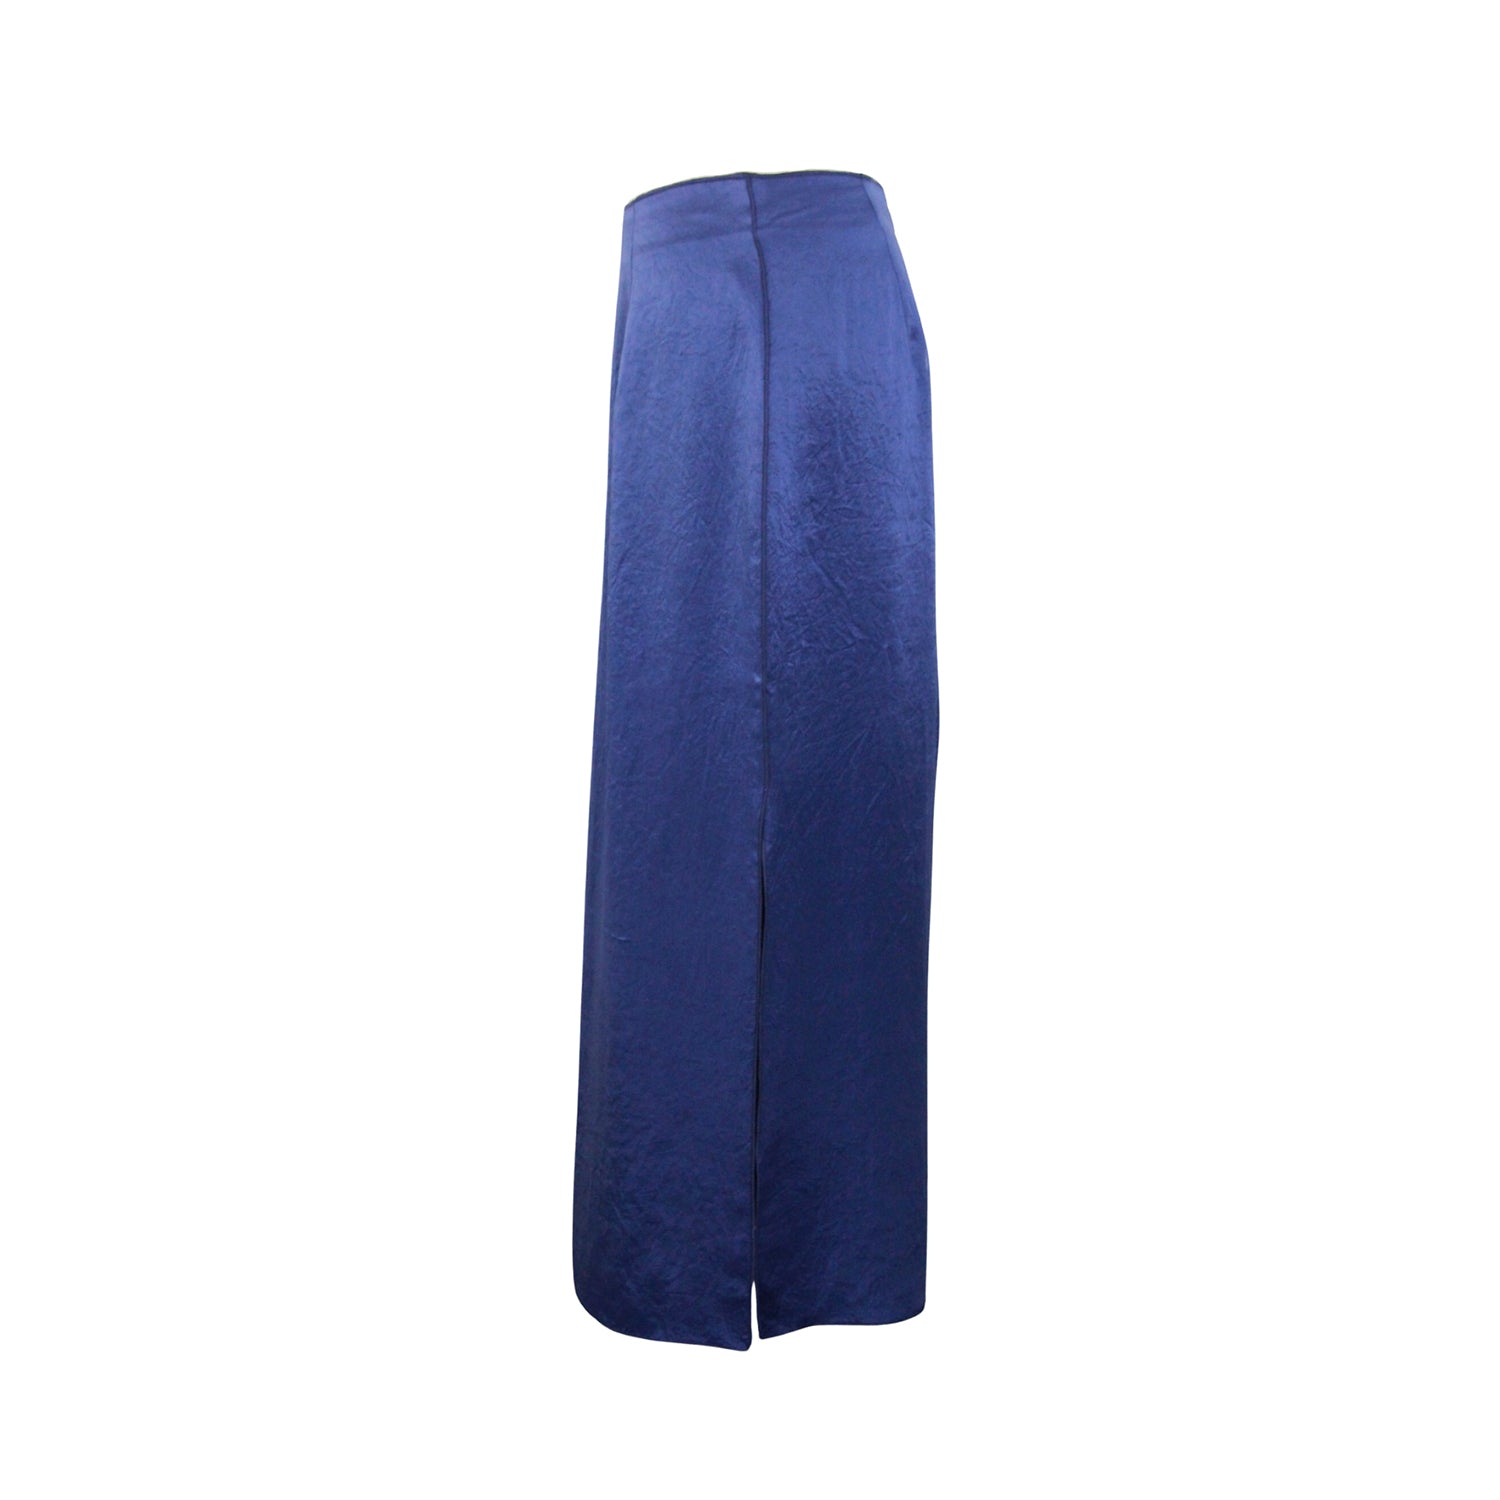 “Aurora” Acetate Skirt - INDIGO BLUE